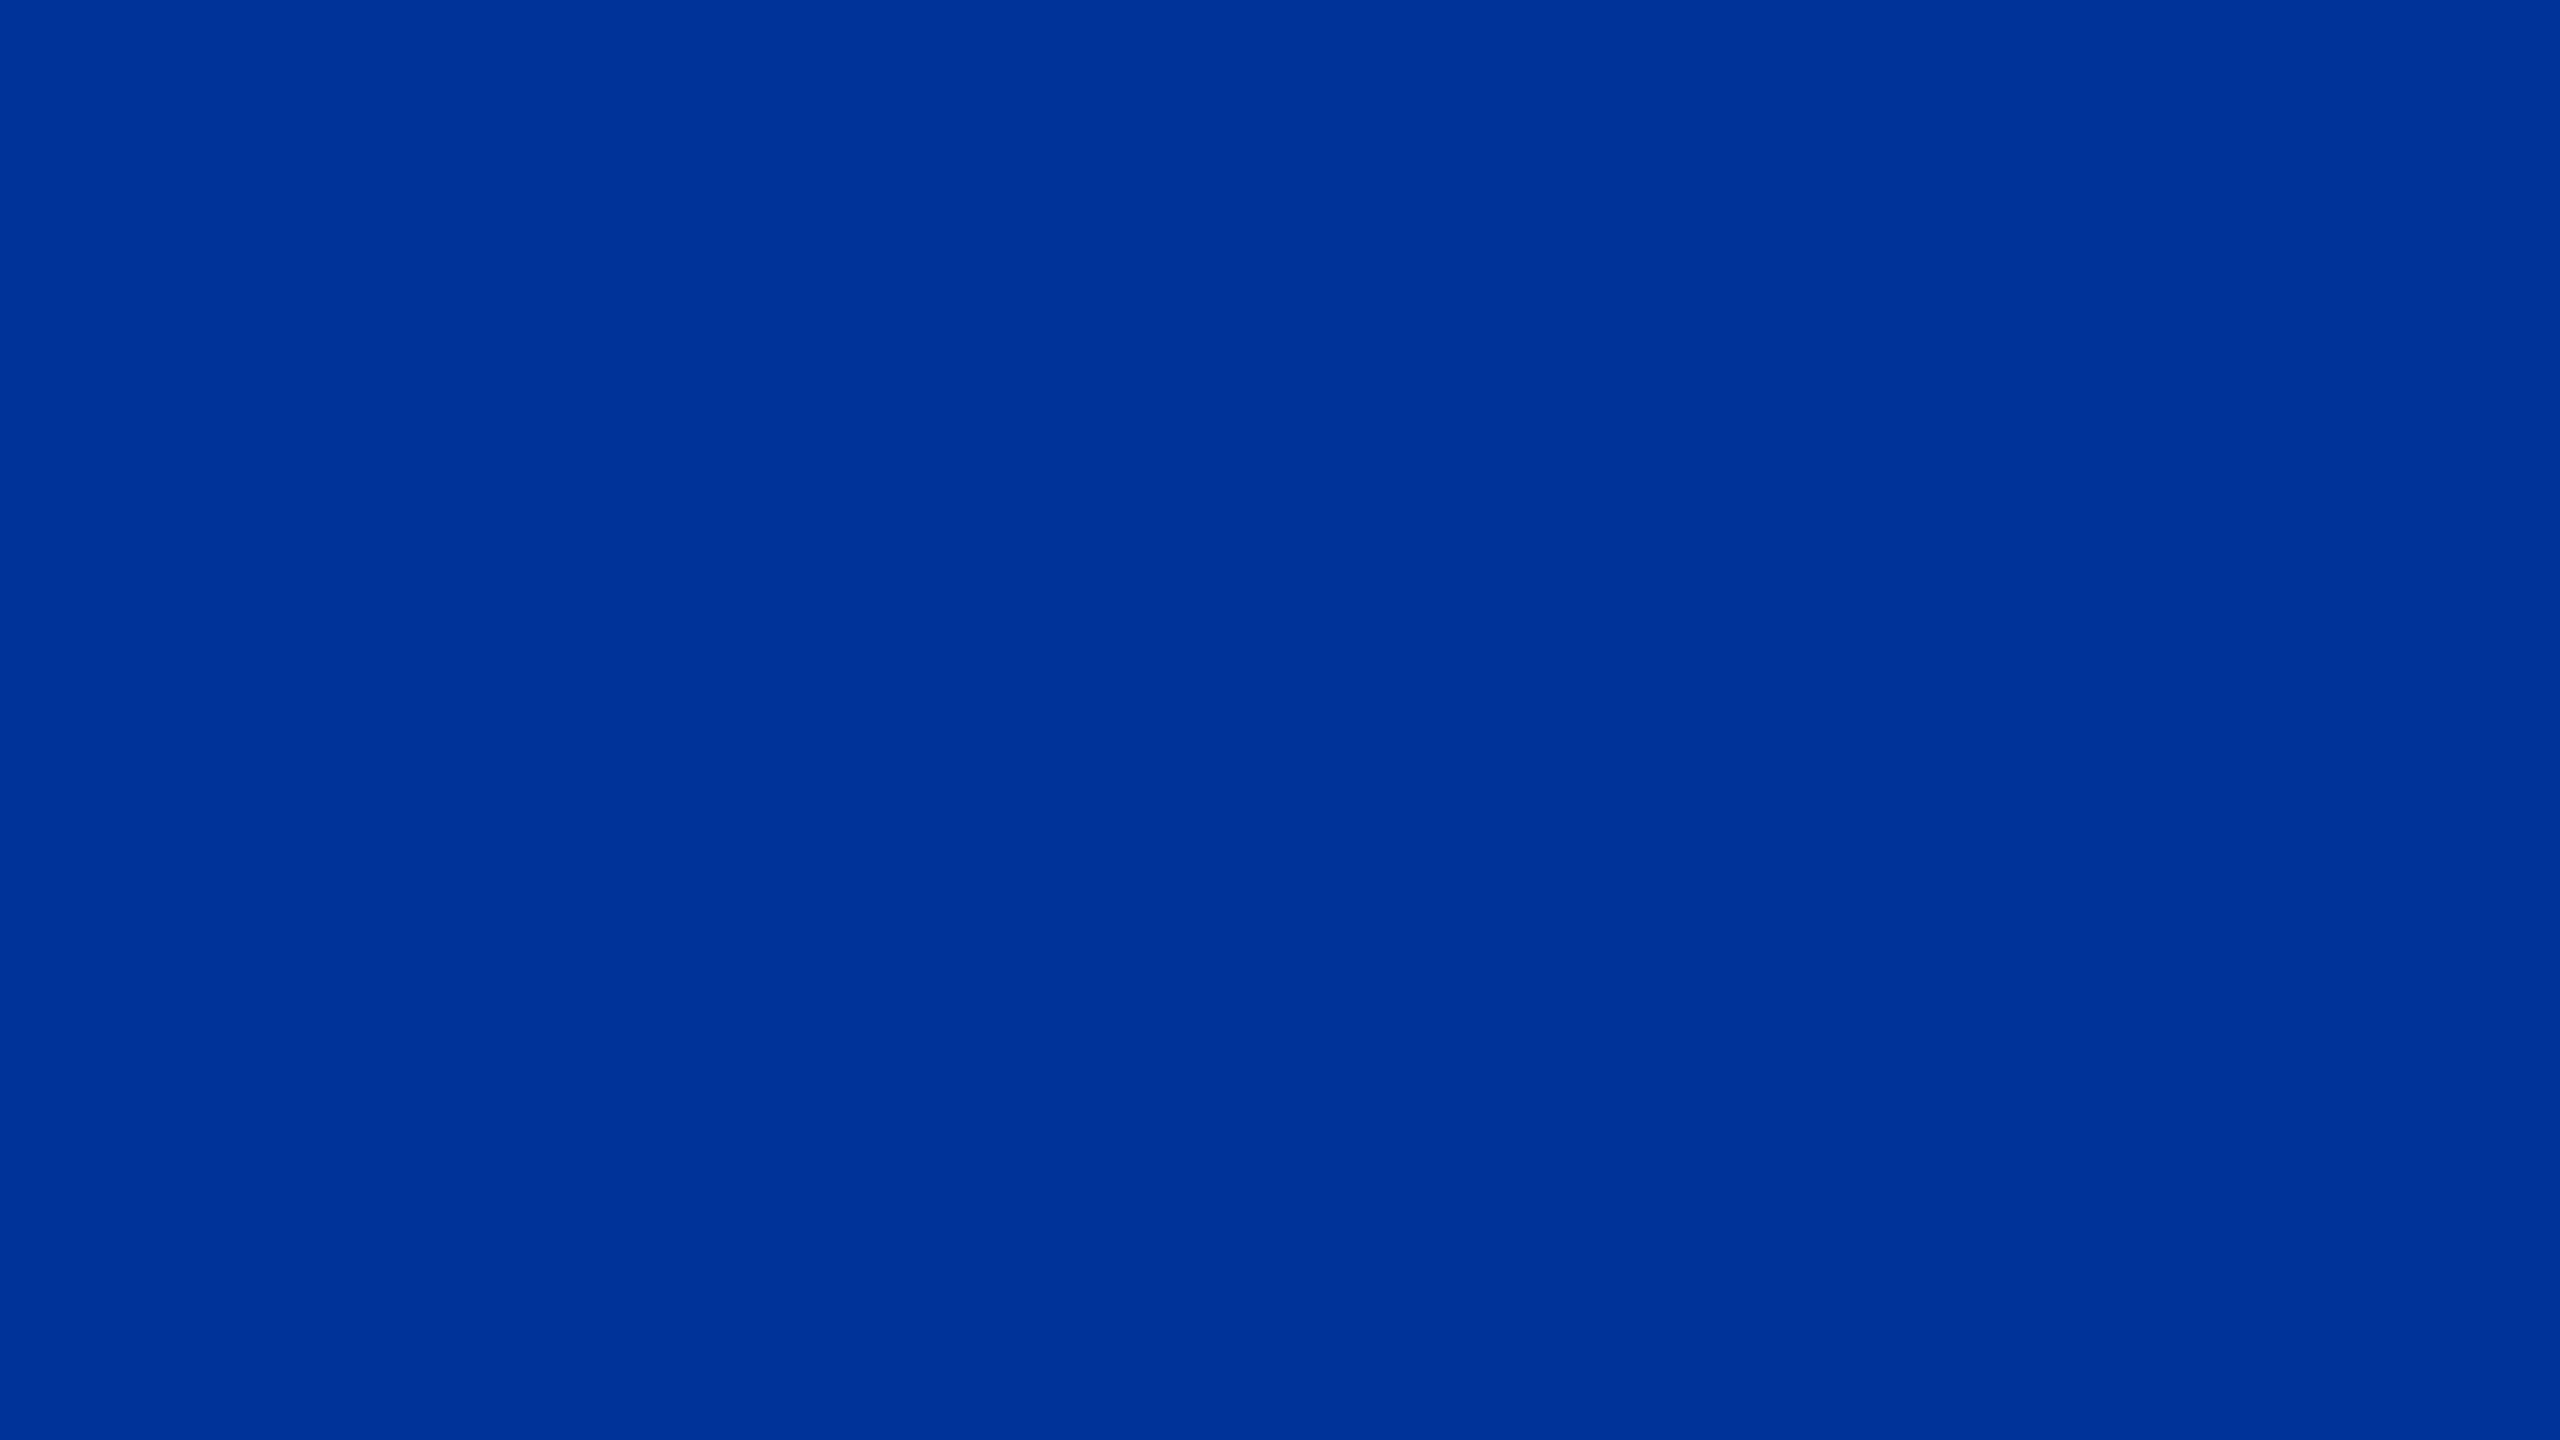 2560x1440 Dark Powder Blue Solid Color Background